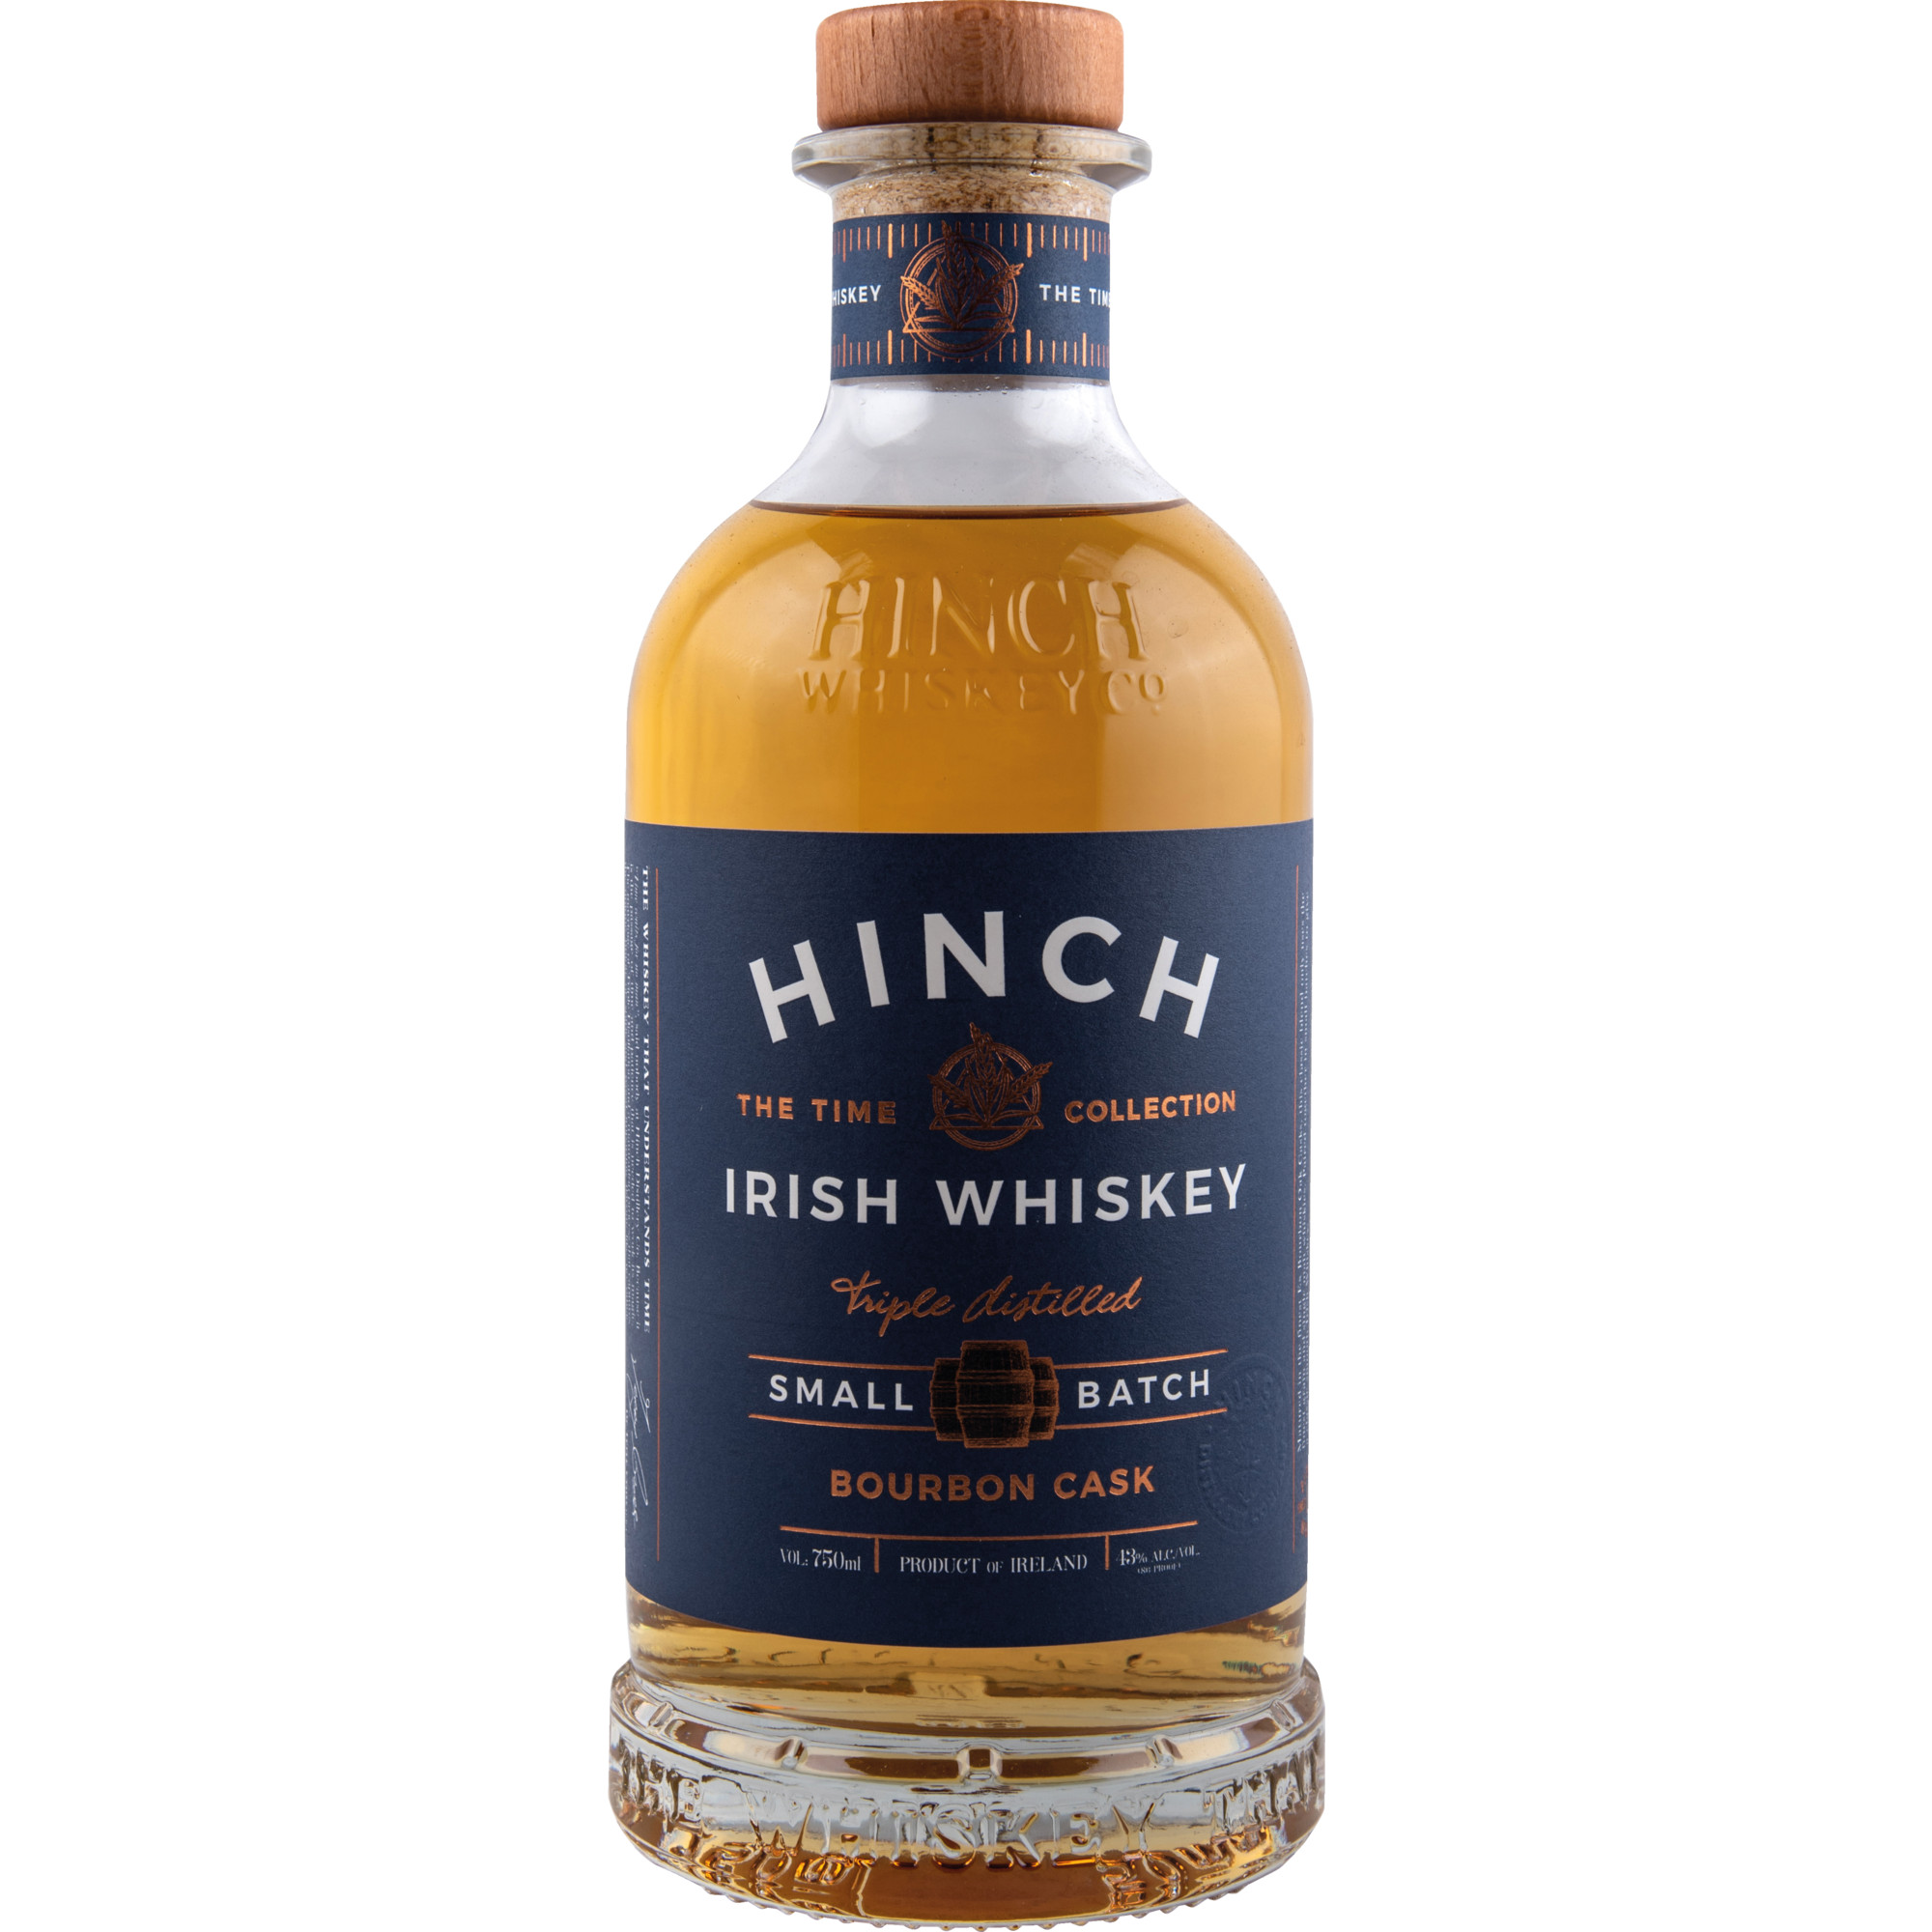 Hinch Small Batch Bourbon Cask, Irish Whiskey, Irland, 0,7 L, 43 Vol., Spirituosen  Spirituosen Hawesko